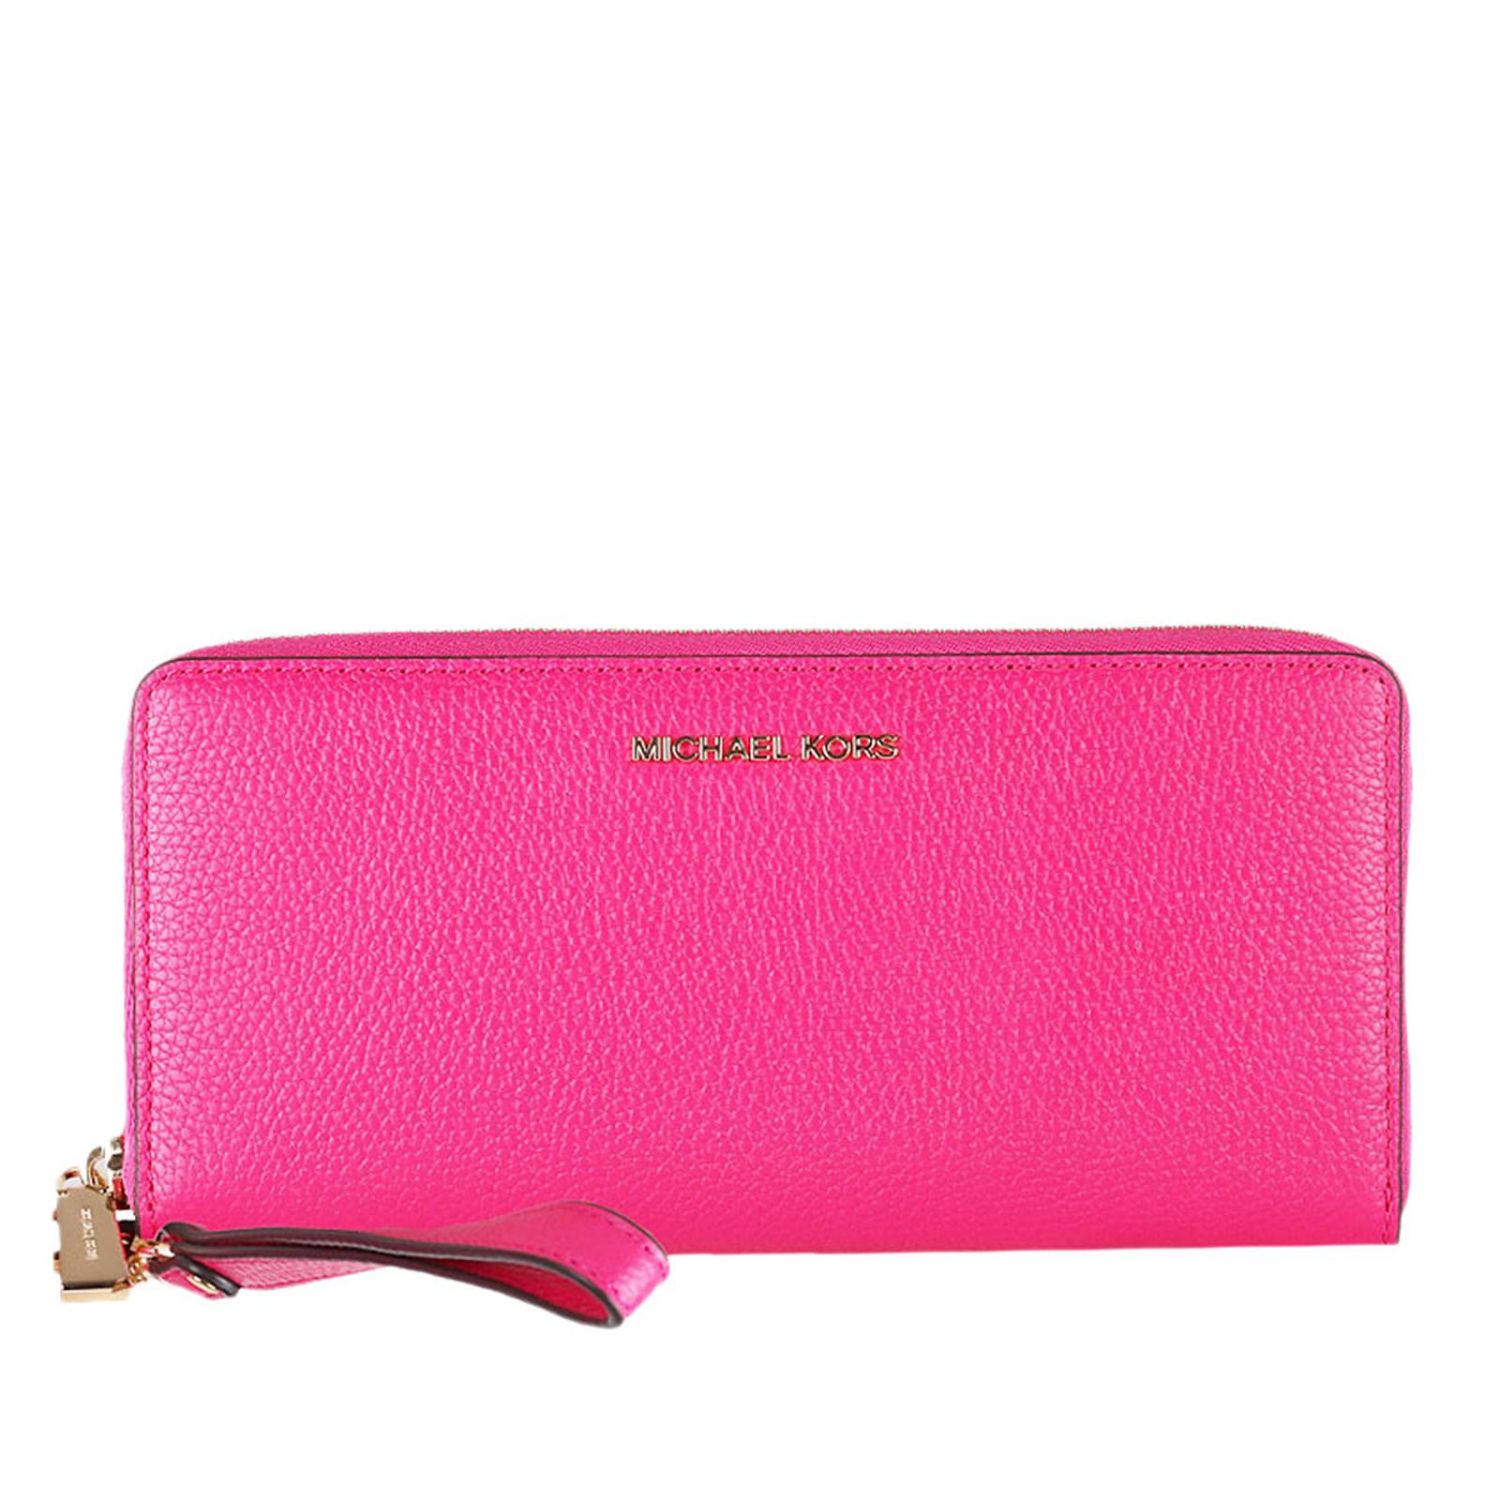 michael kors wallet women pink